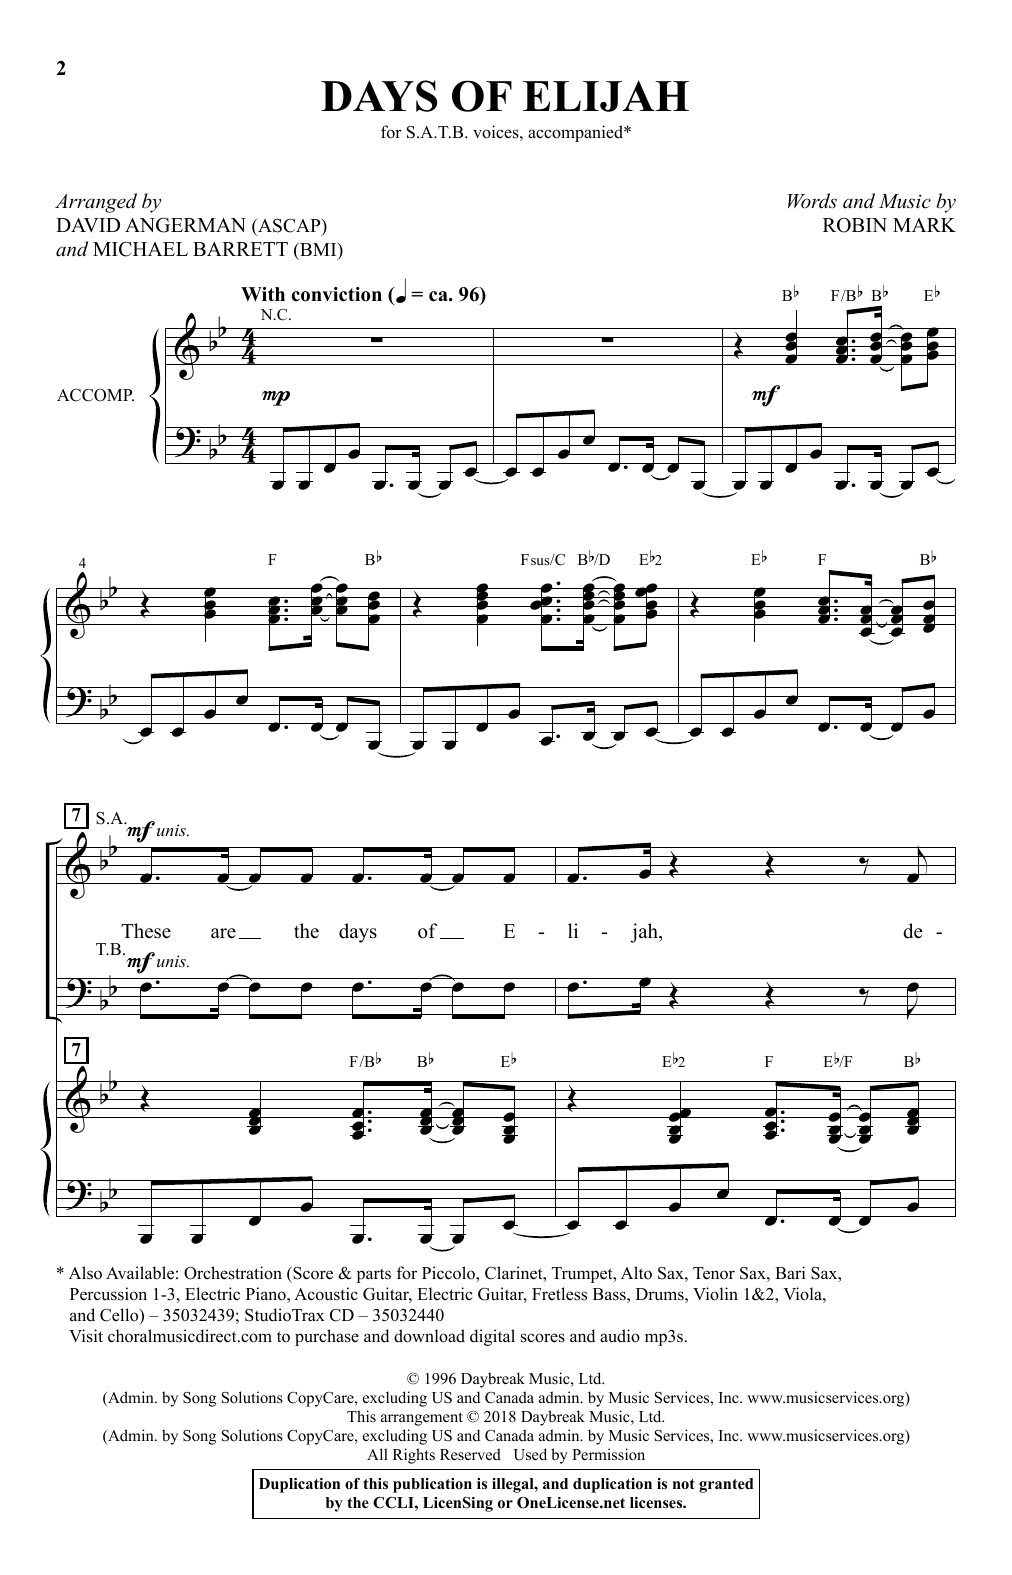 Robin Mark Days Of Elijah (arr. David Angerman & Michael Barrett) Sheet Music Notes & Chords for SATB Choir - Download or Print PDF